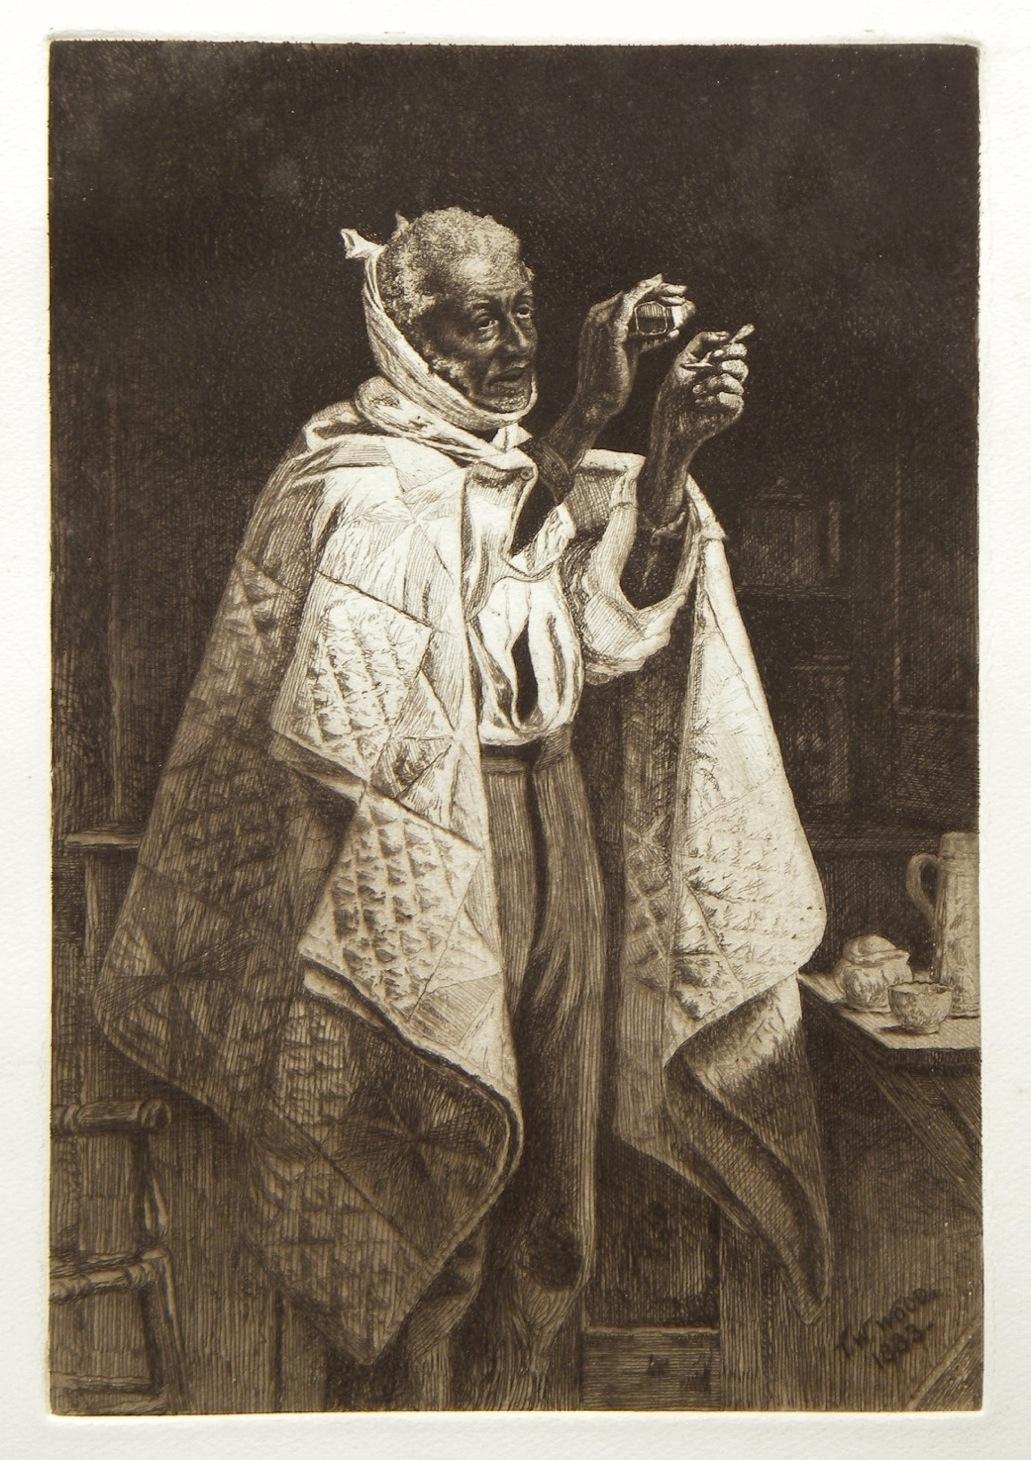 Thomas Waterman Wood Portrait Print - "His Own Doctor" original etching